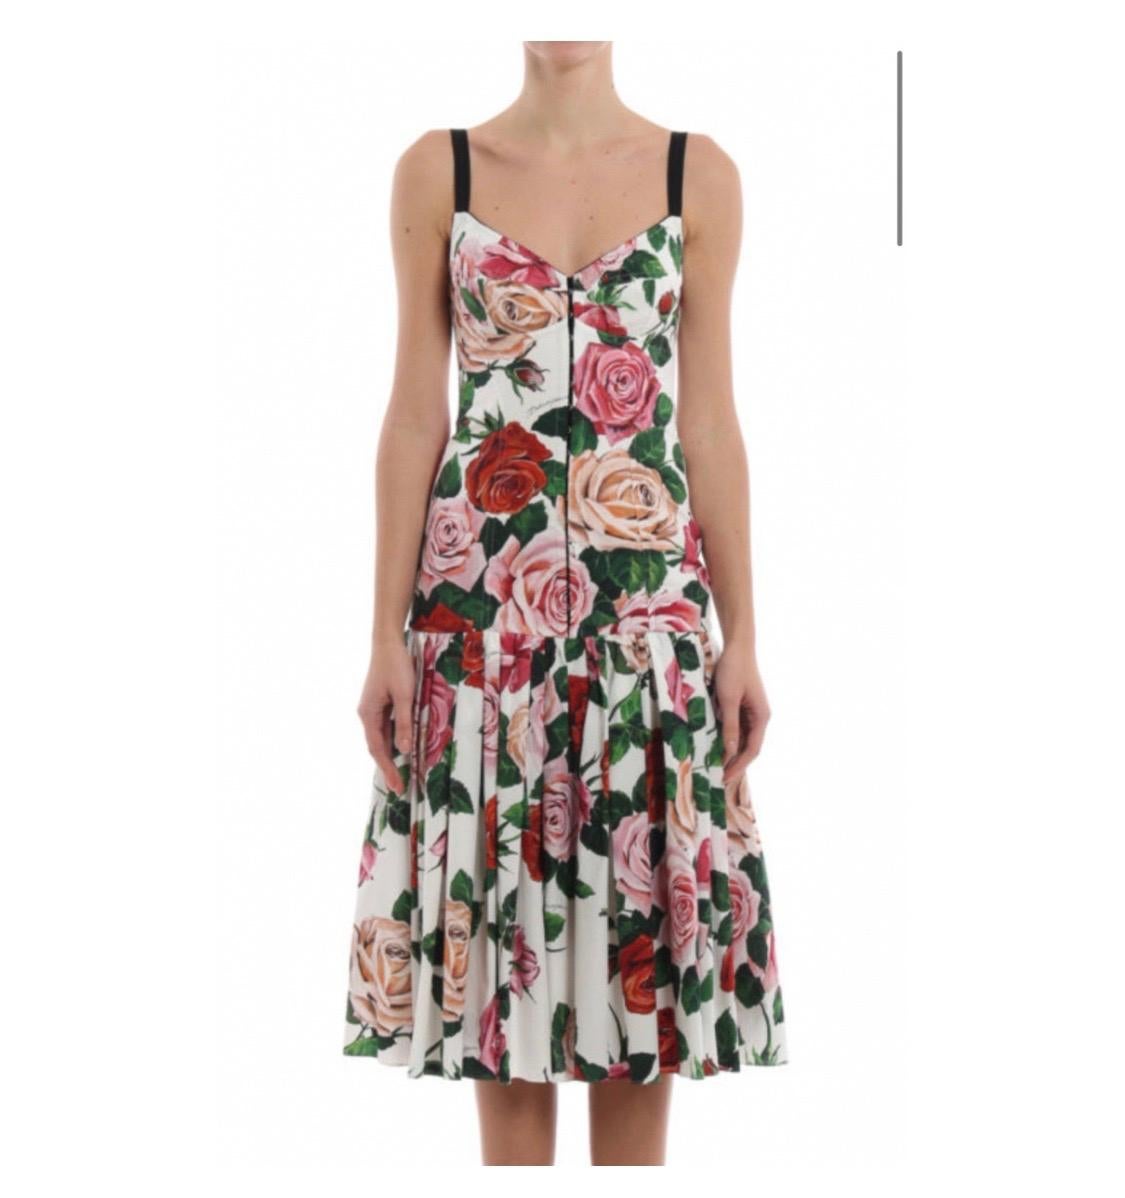 Beige Dolce & Gabbana dress made from
flower printed stretch cotton poplin